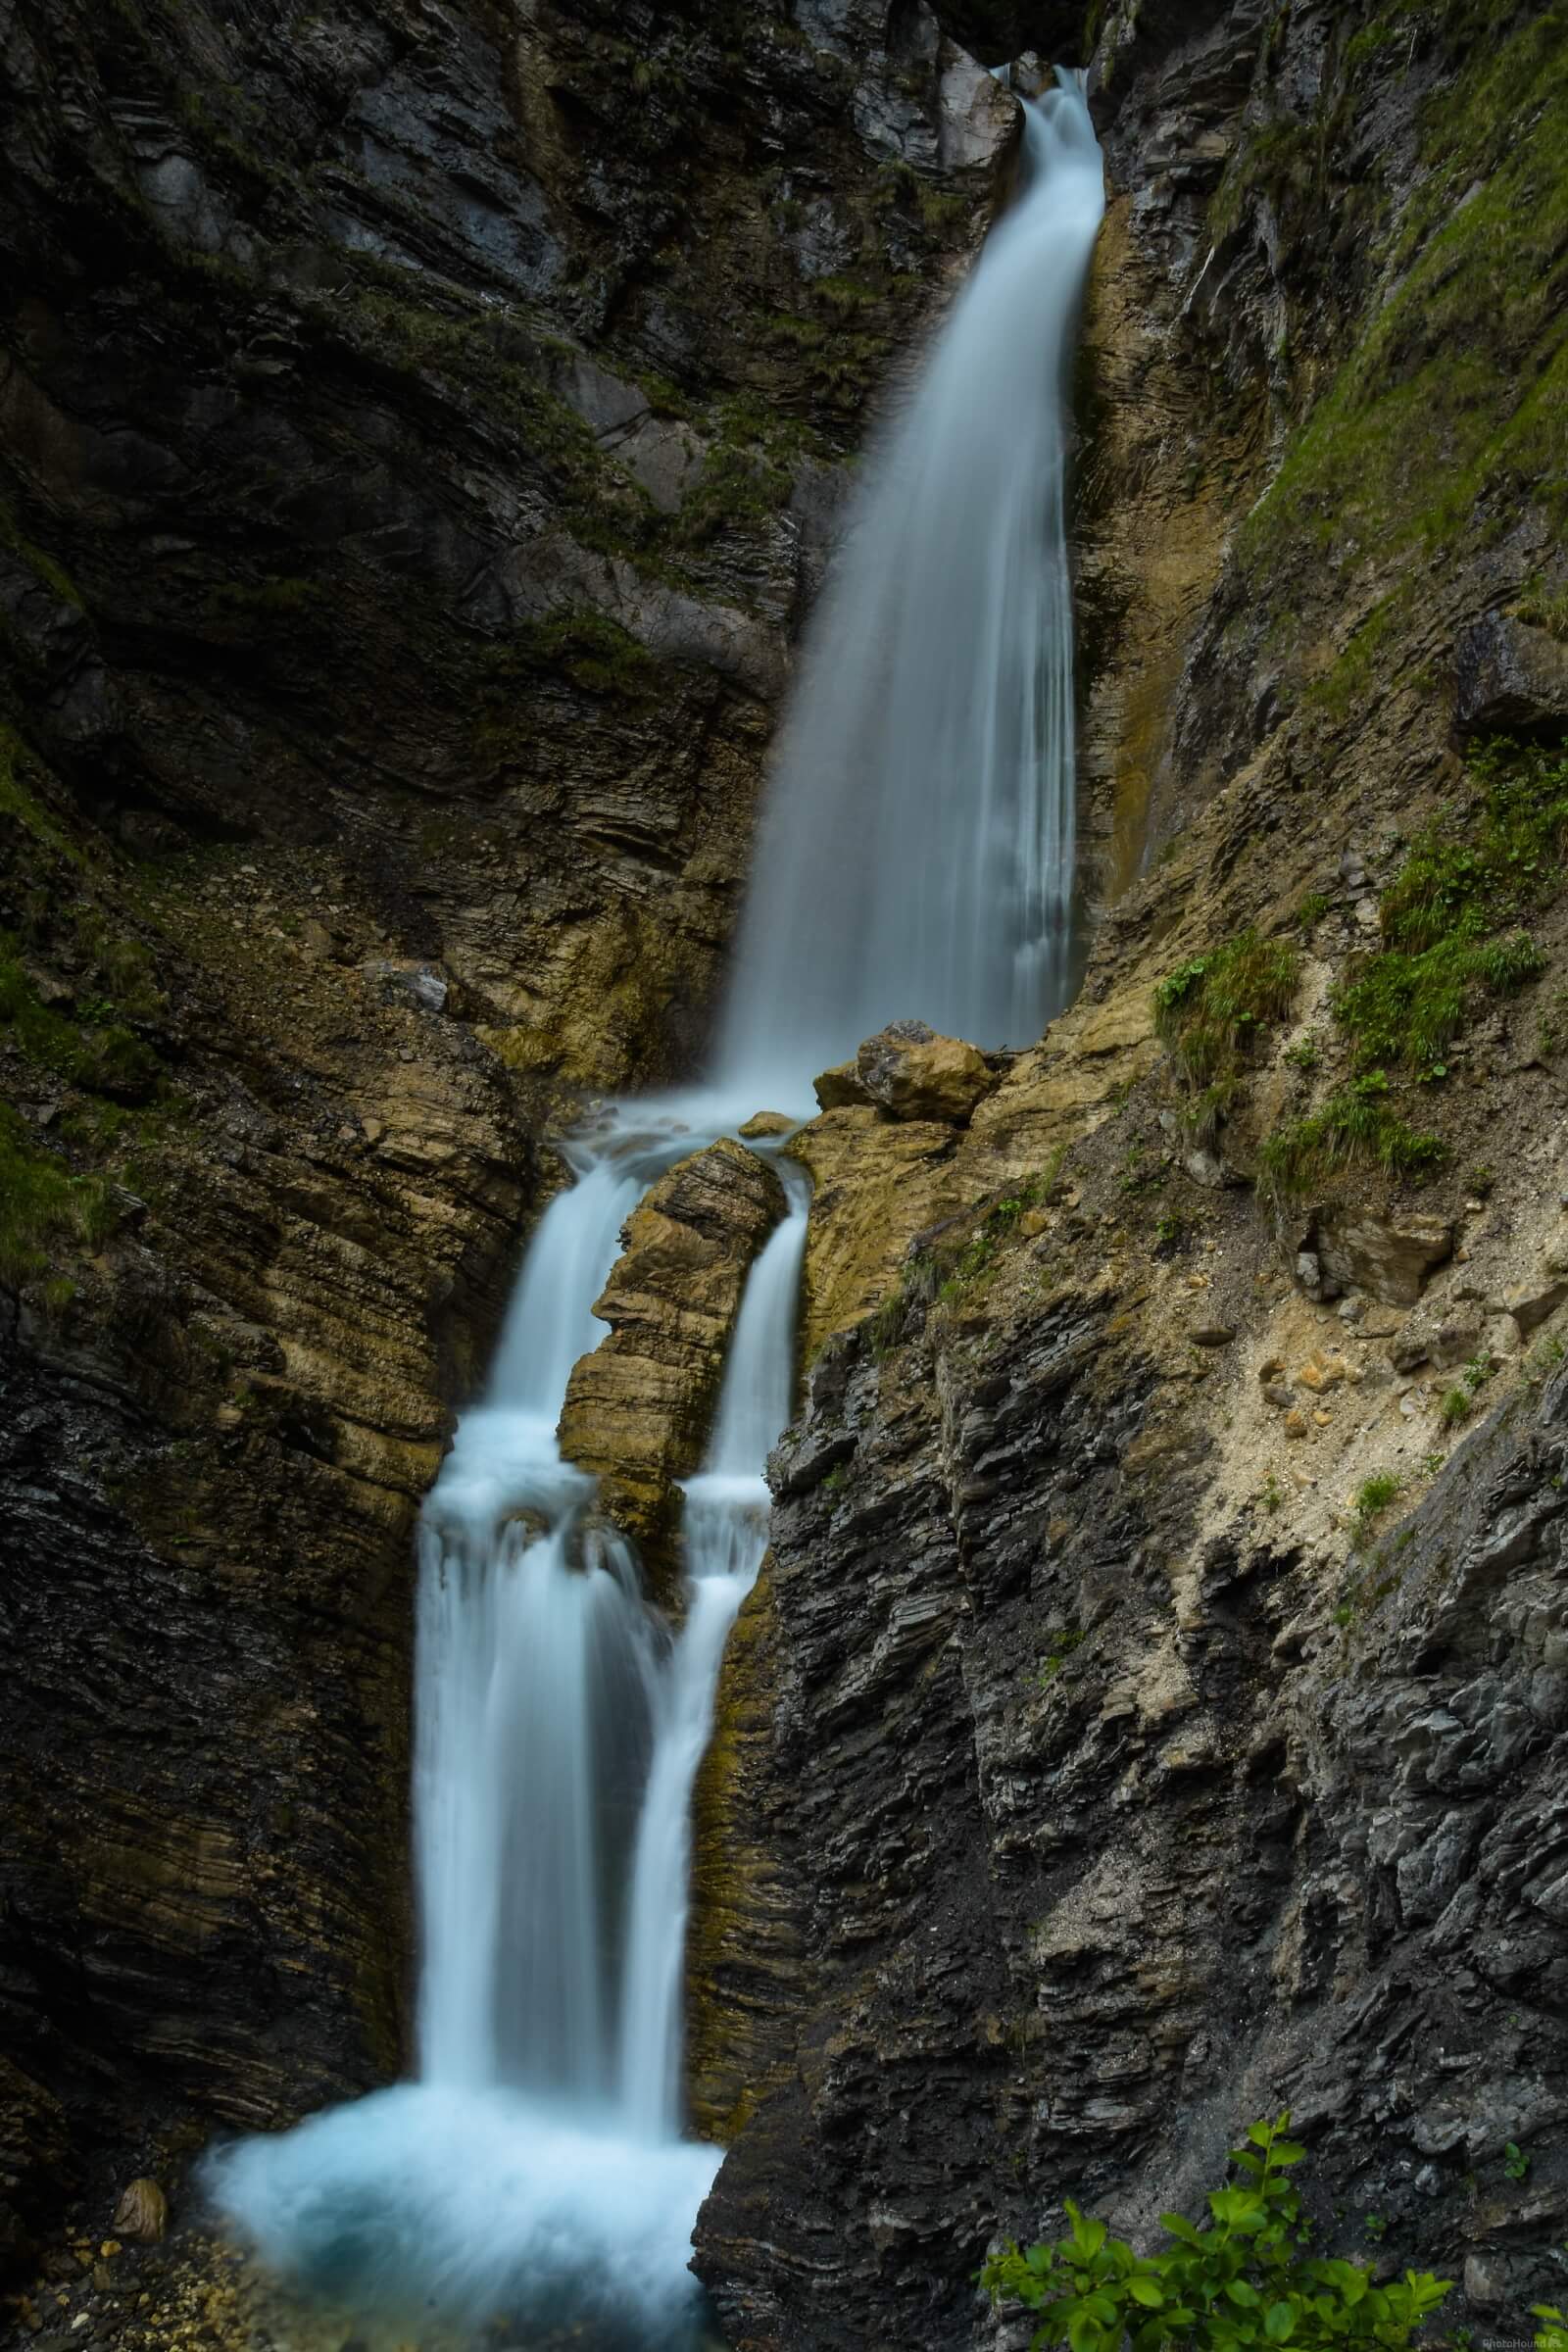 Image of Lower Martuljek Waterfall by Bine Mekina